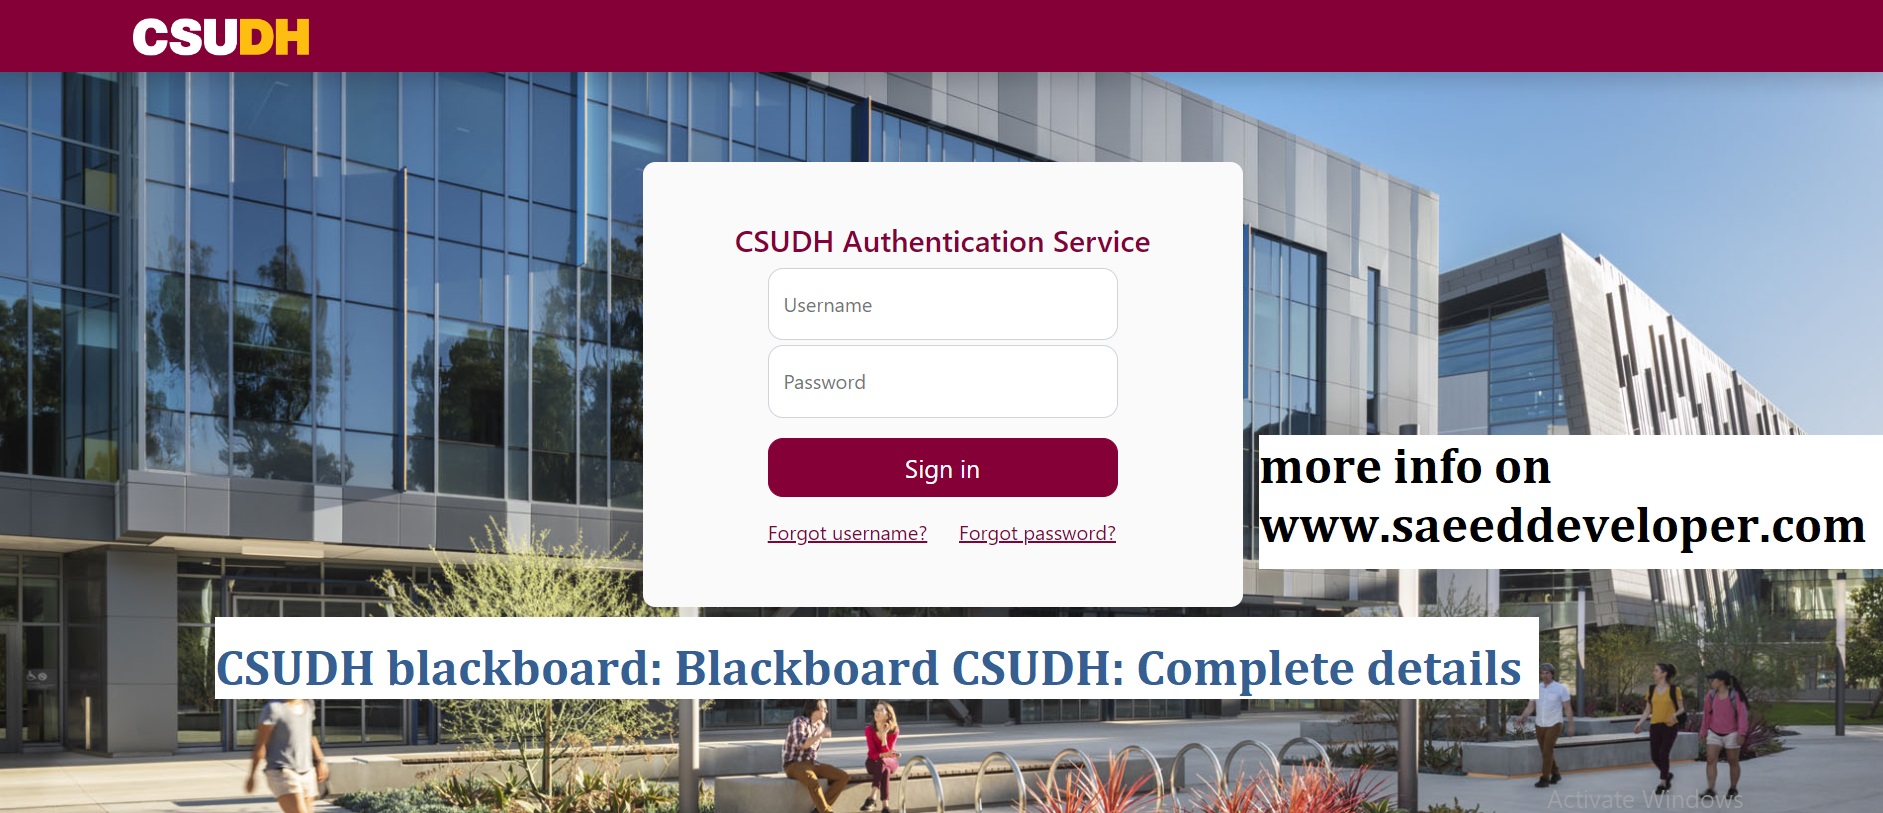 CSUDH blackboard